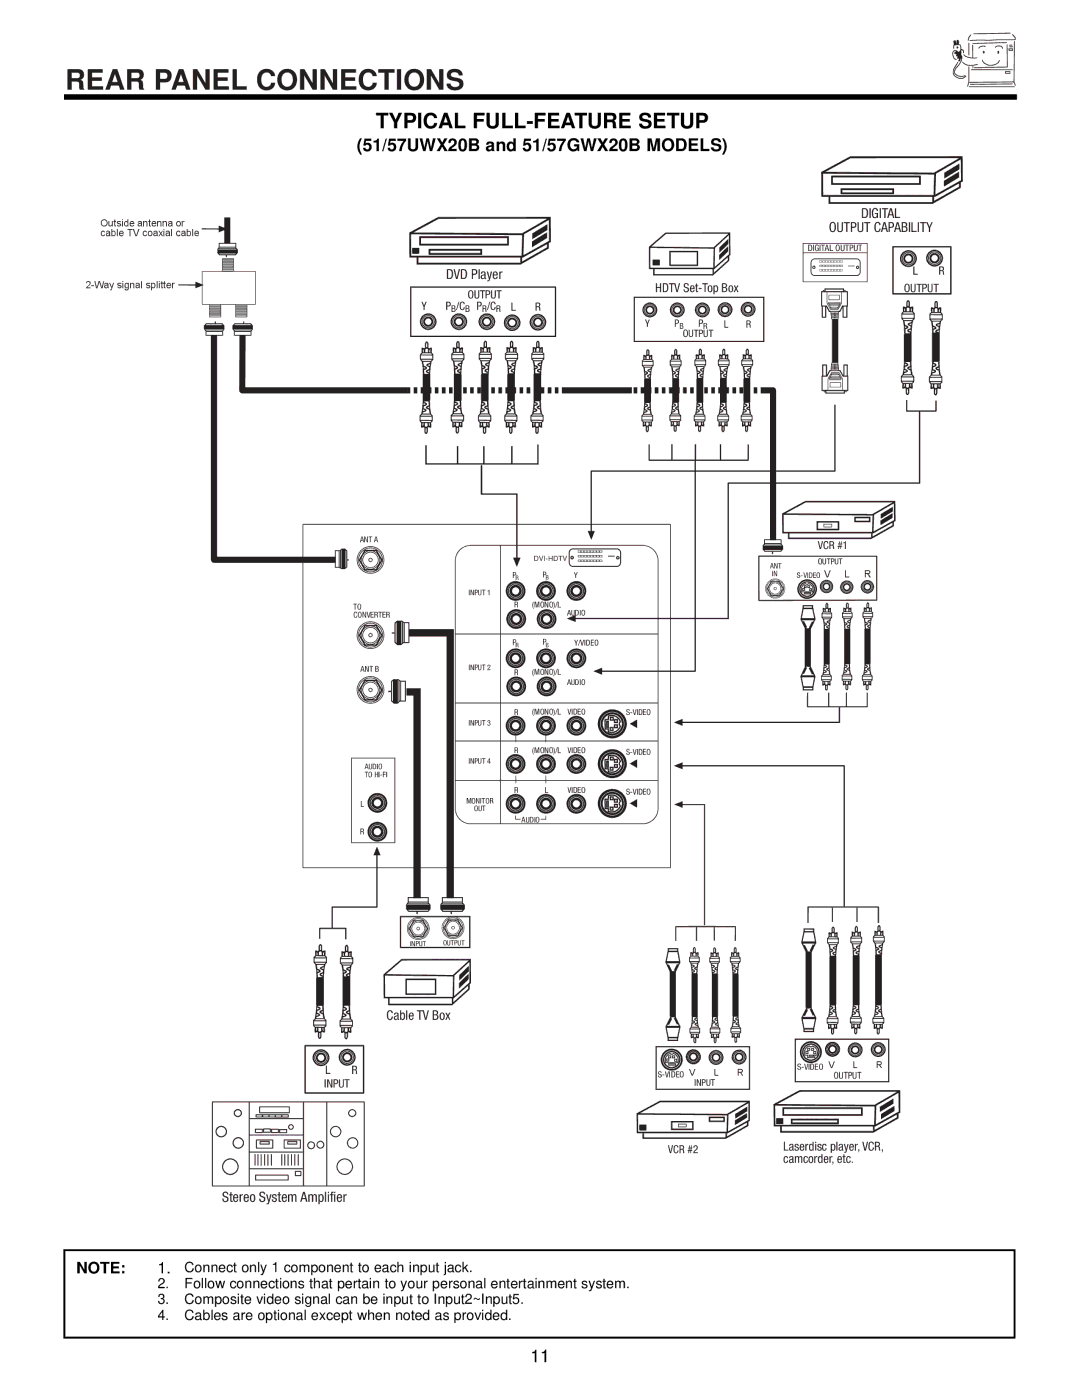 Hitachi 57GWX20B, 51GWX20B, 51UWX20B, 43FWX20B Rear Panel Connections, Typical FULL-FEATURE Setup 